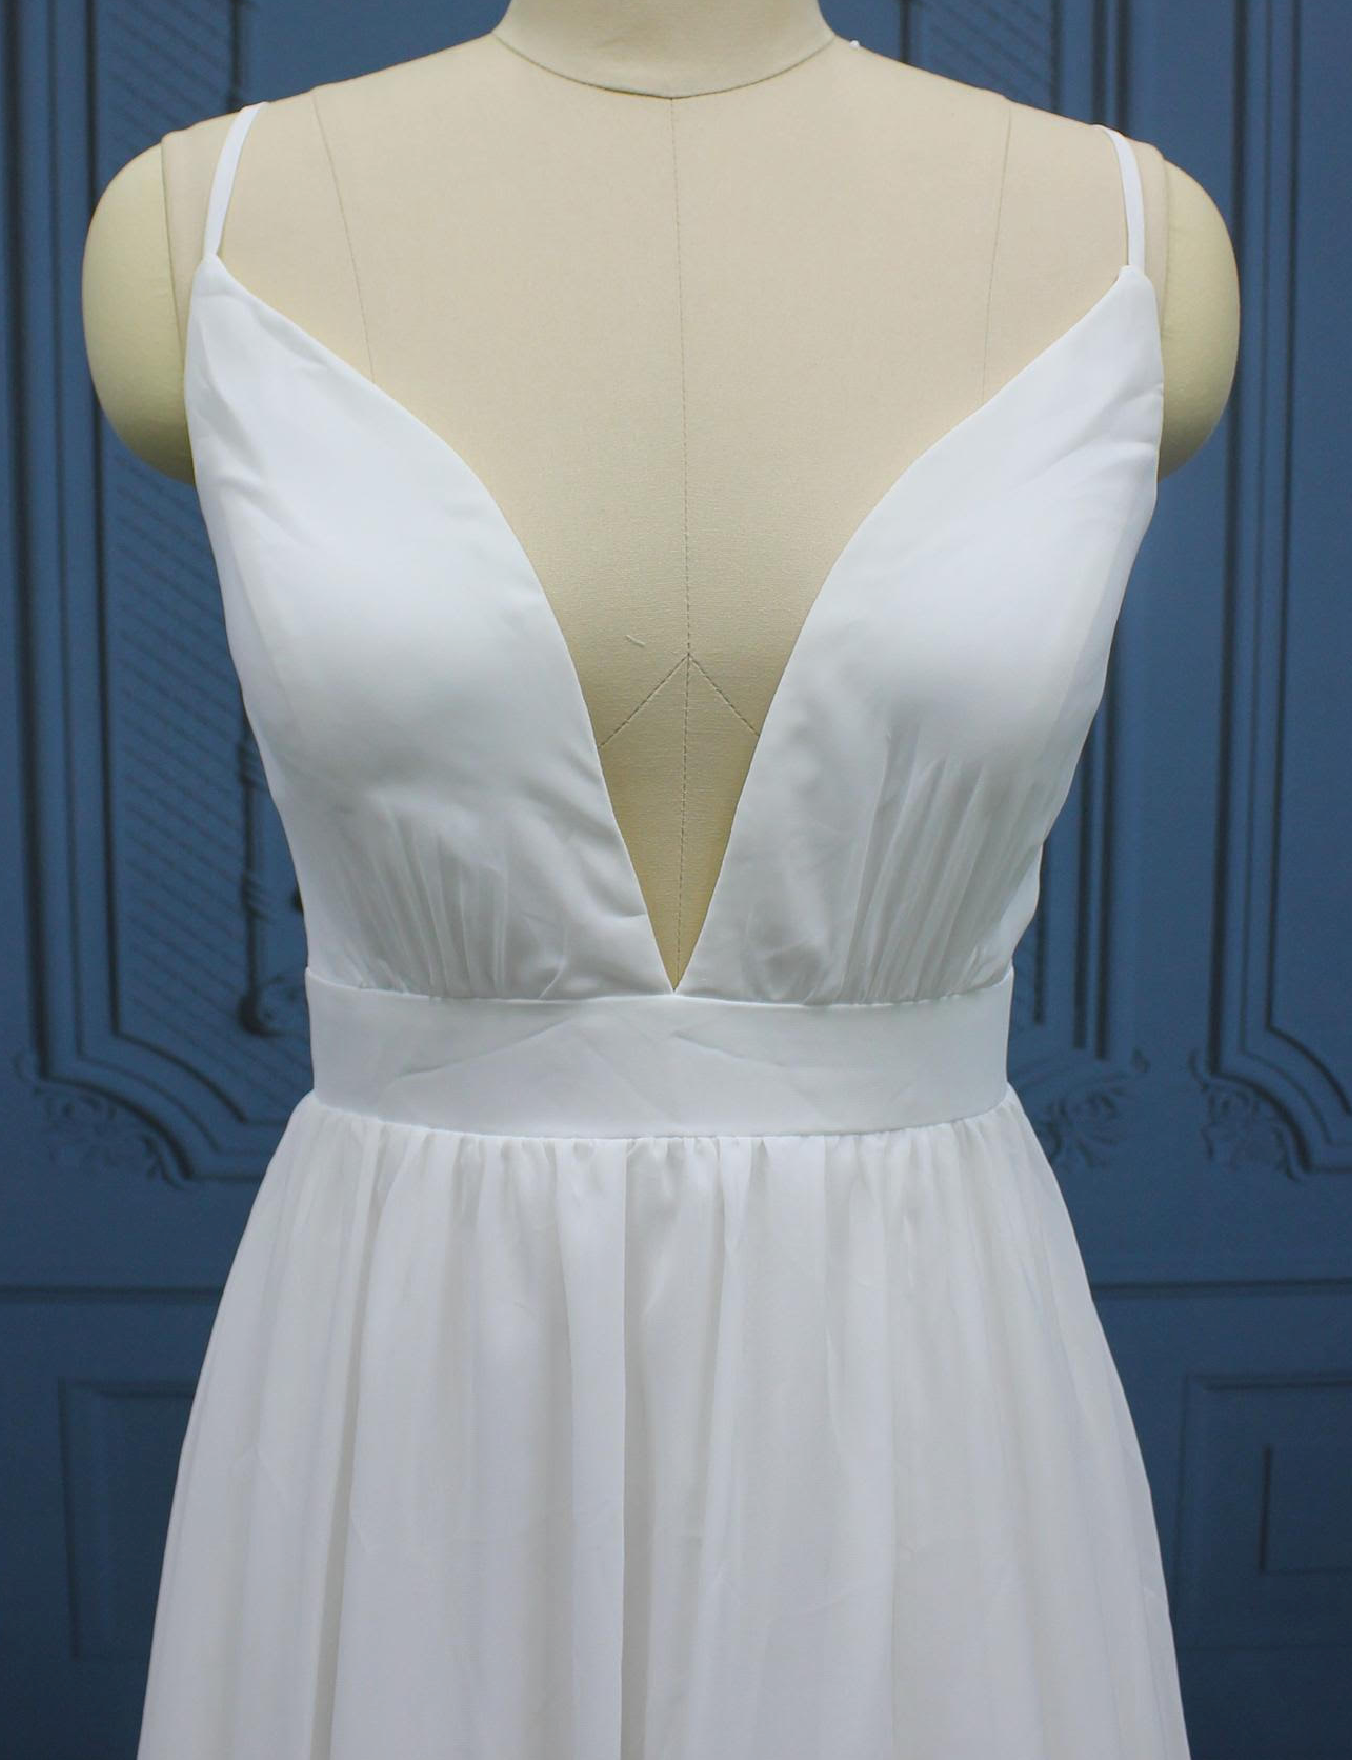 Cami straps V shape back detail pleated chiffon maxi dress $129